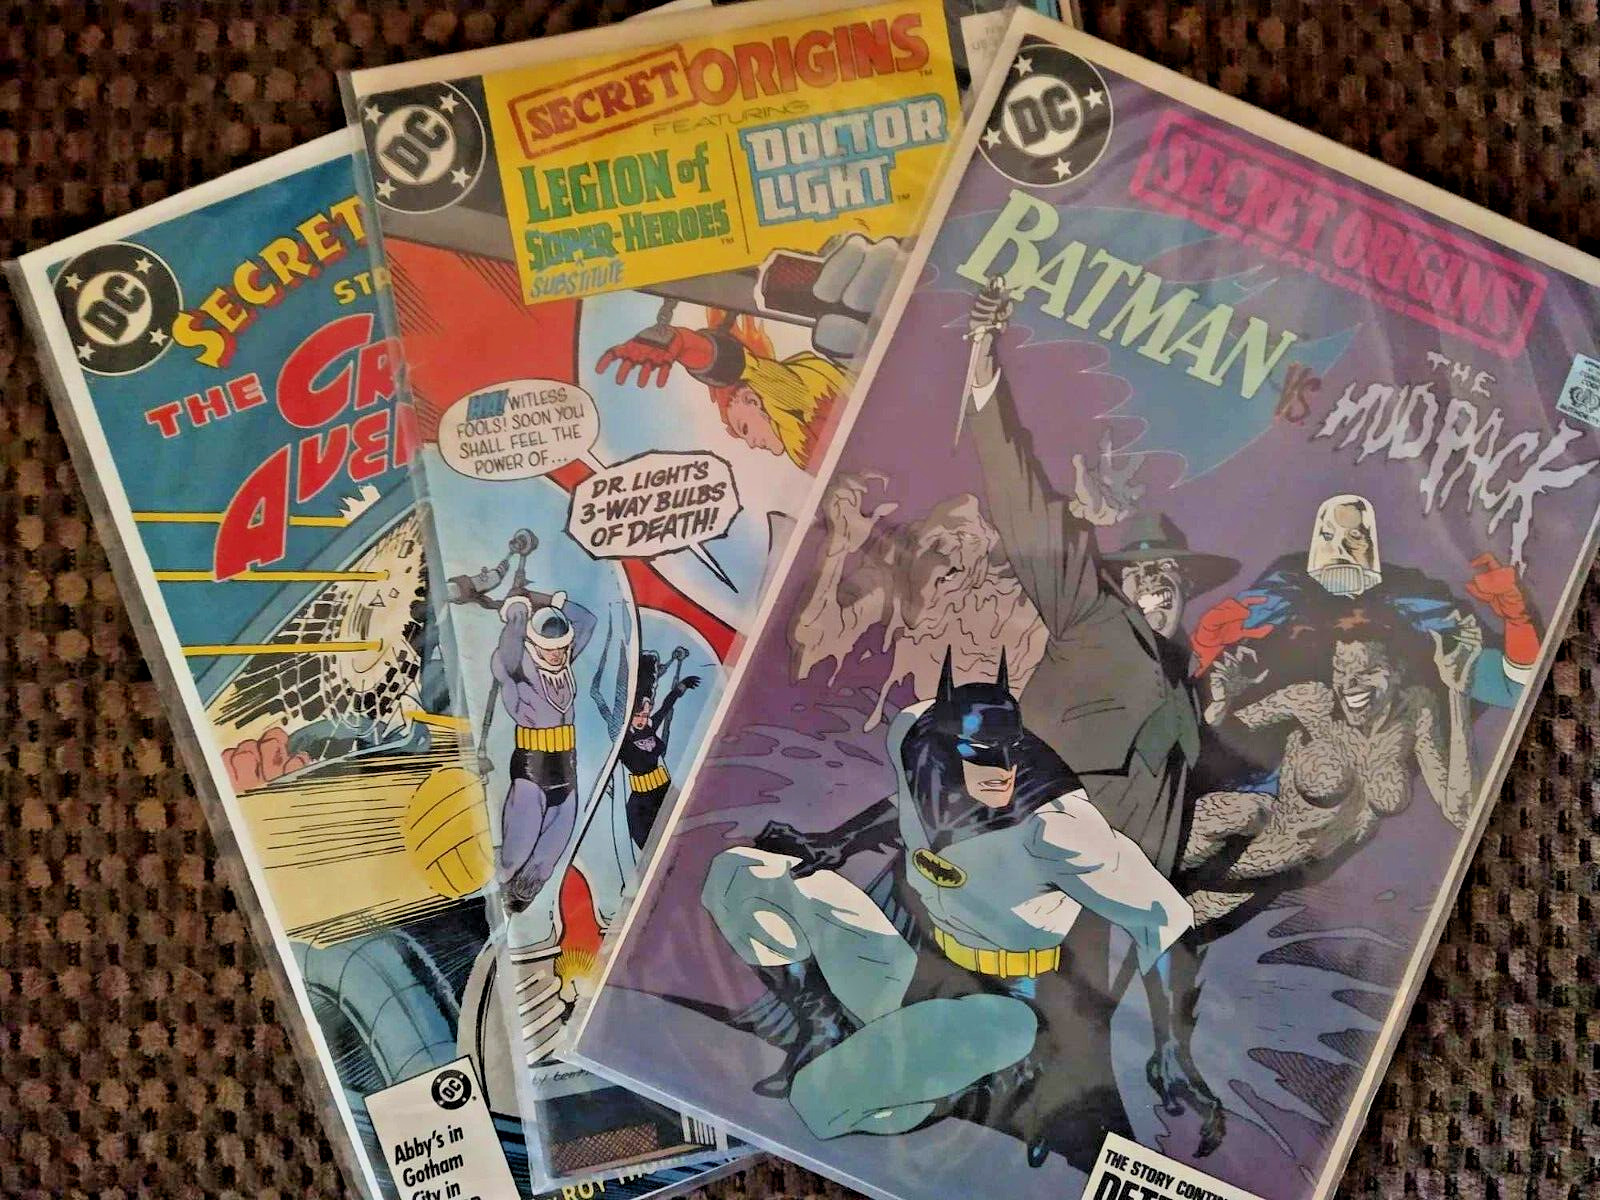 Lot of 3 Secret Origins Batman vs Mudpack DR Light plus More DC Comics